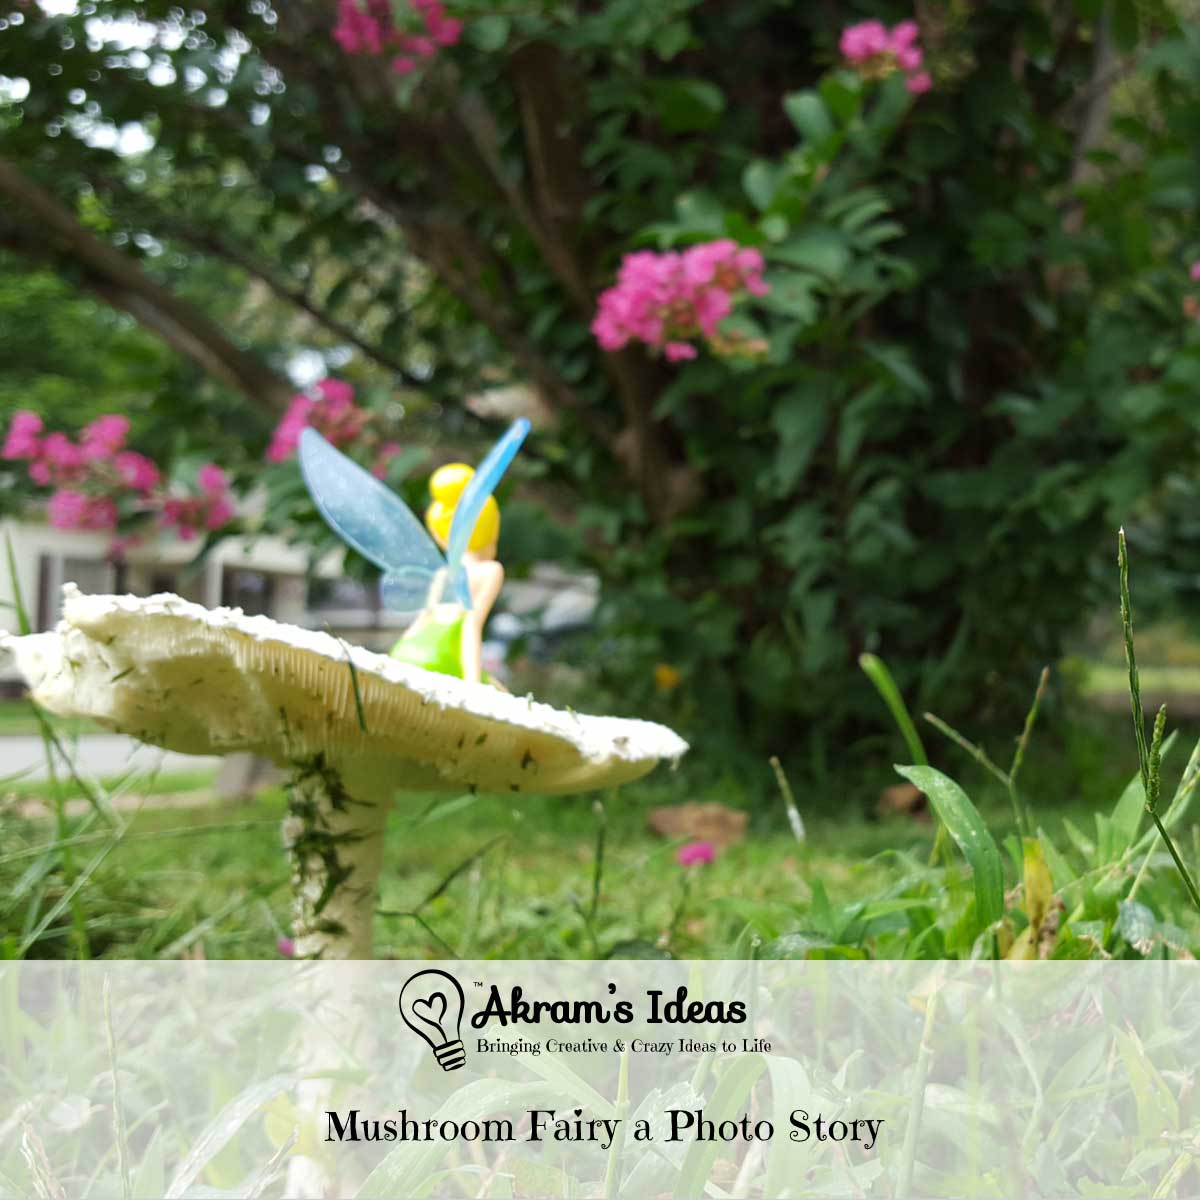 Akram's Ideas: Mushroom Fairy a Photo Story